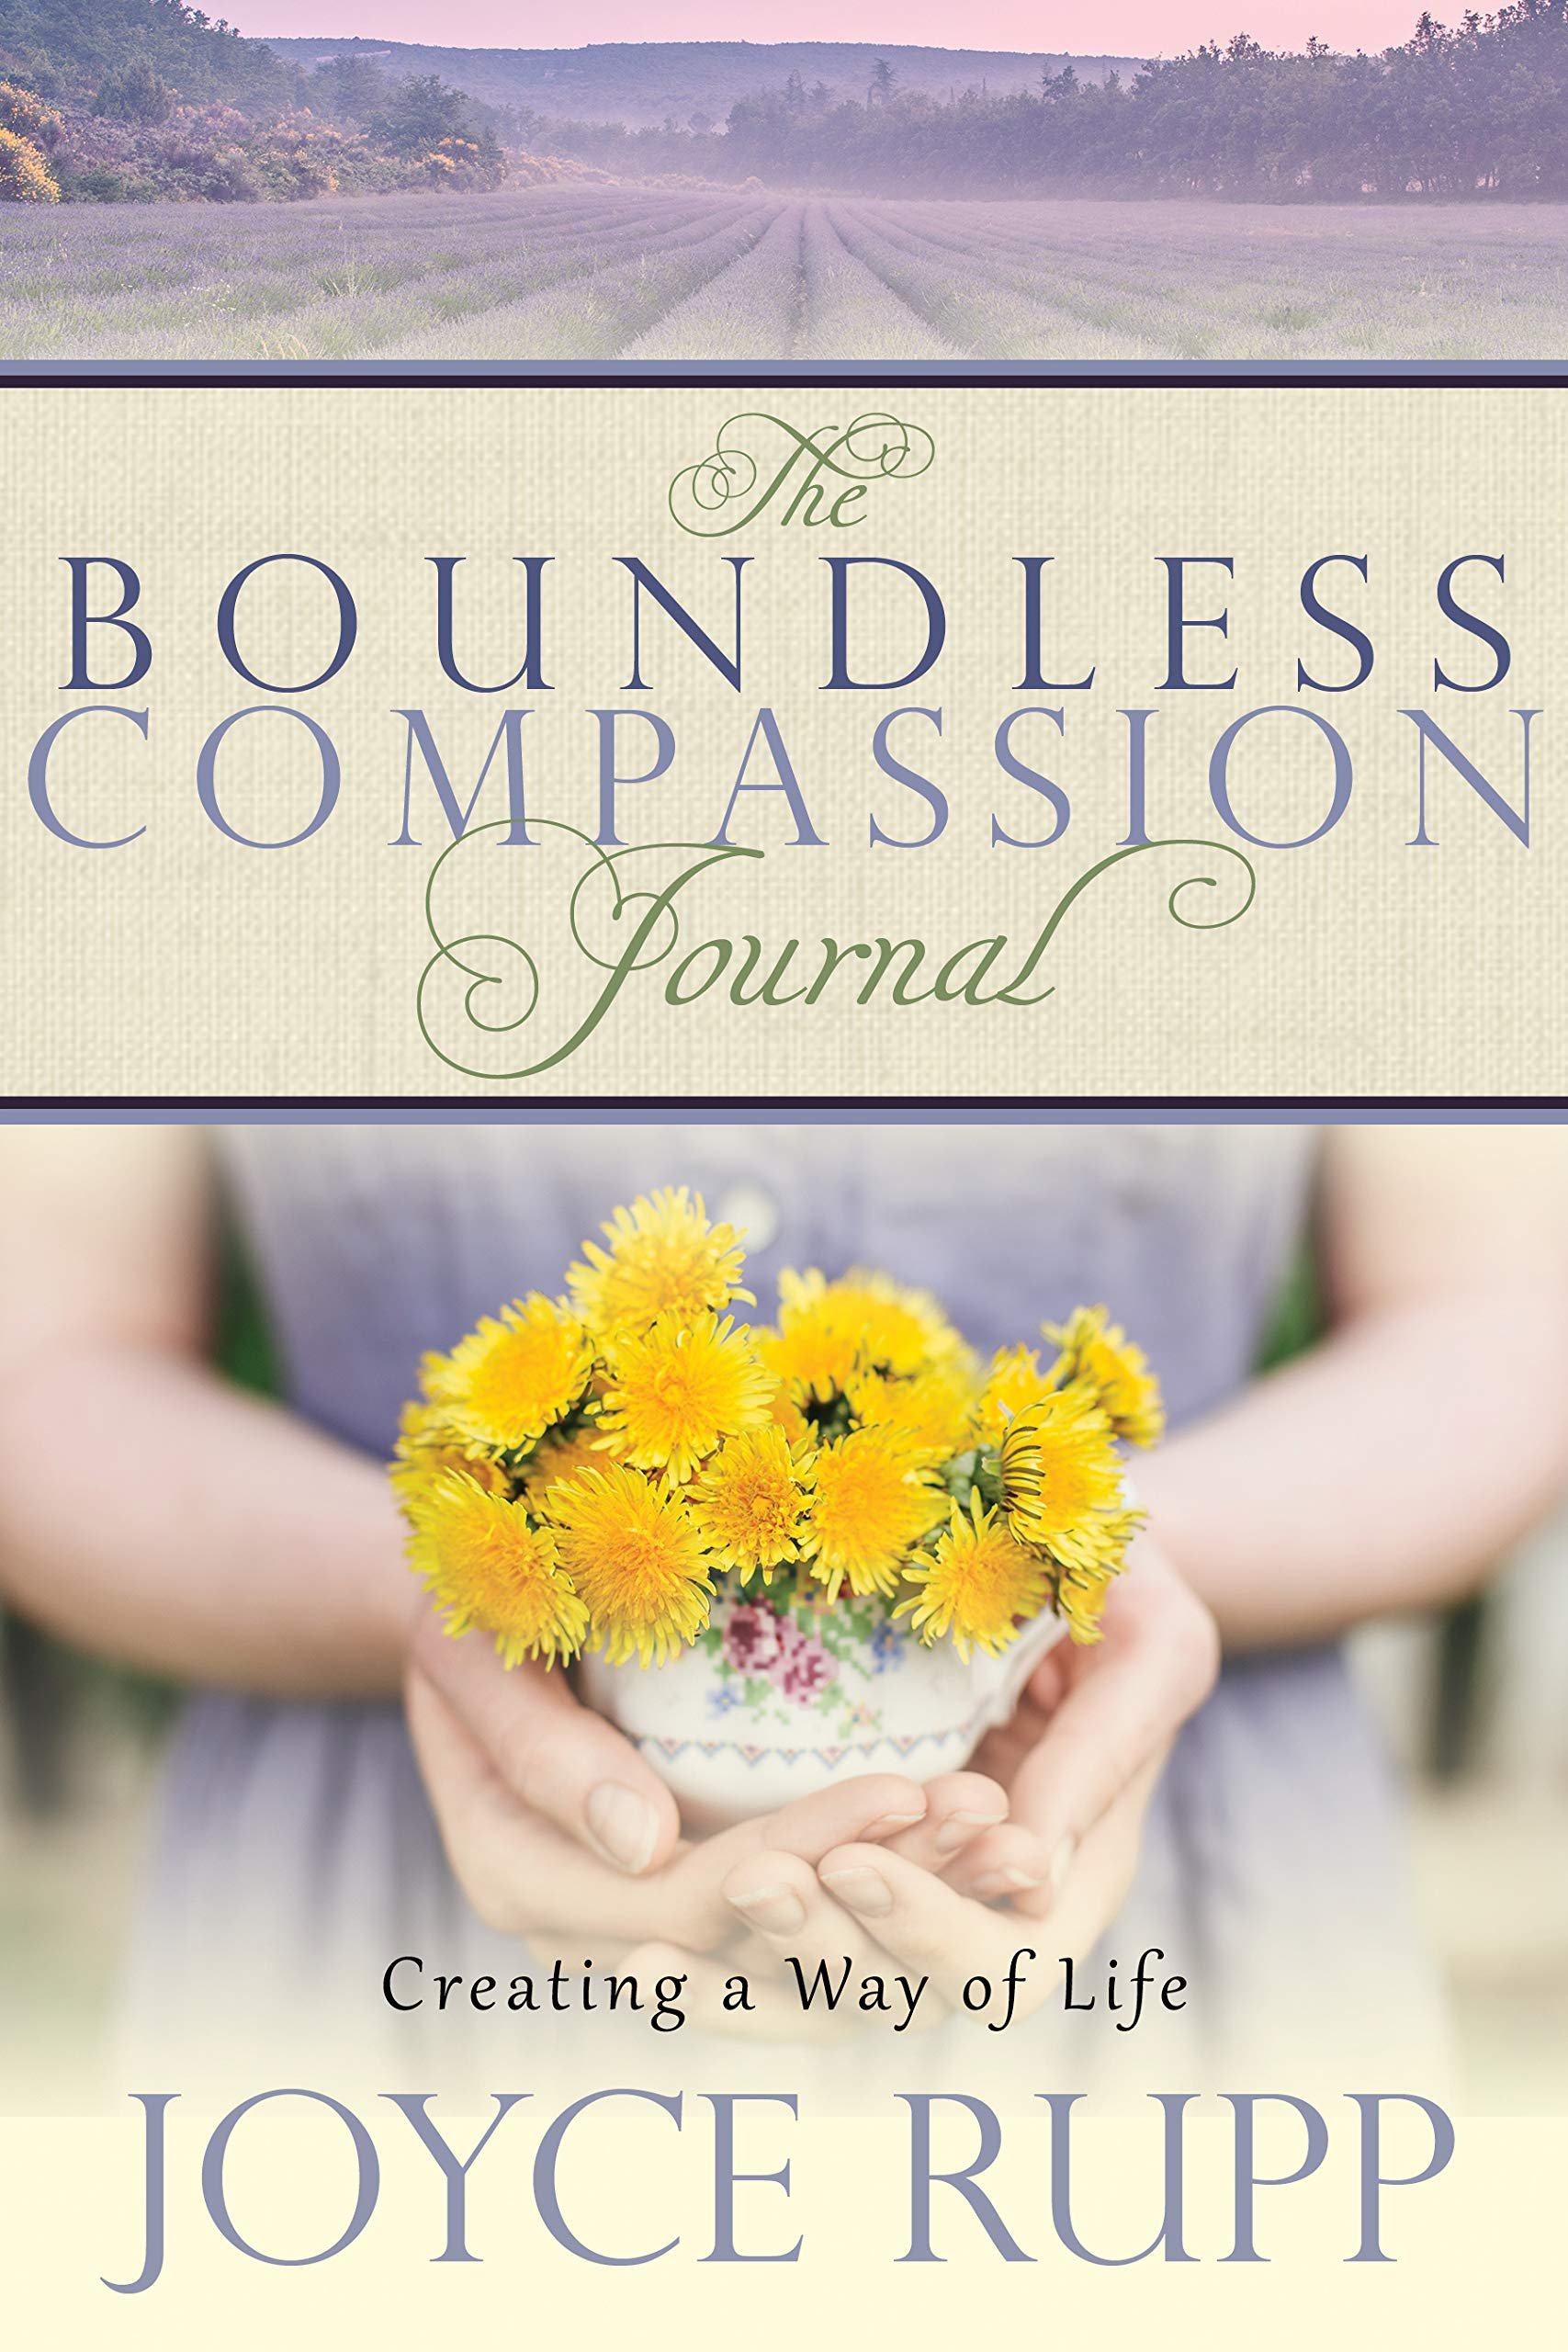 BoundlessCompassionJournal.jpeg